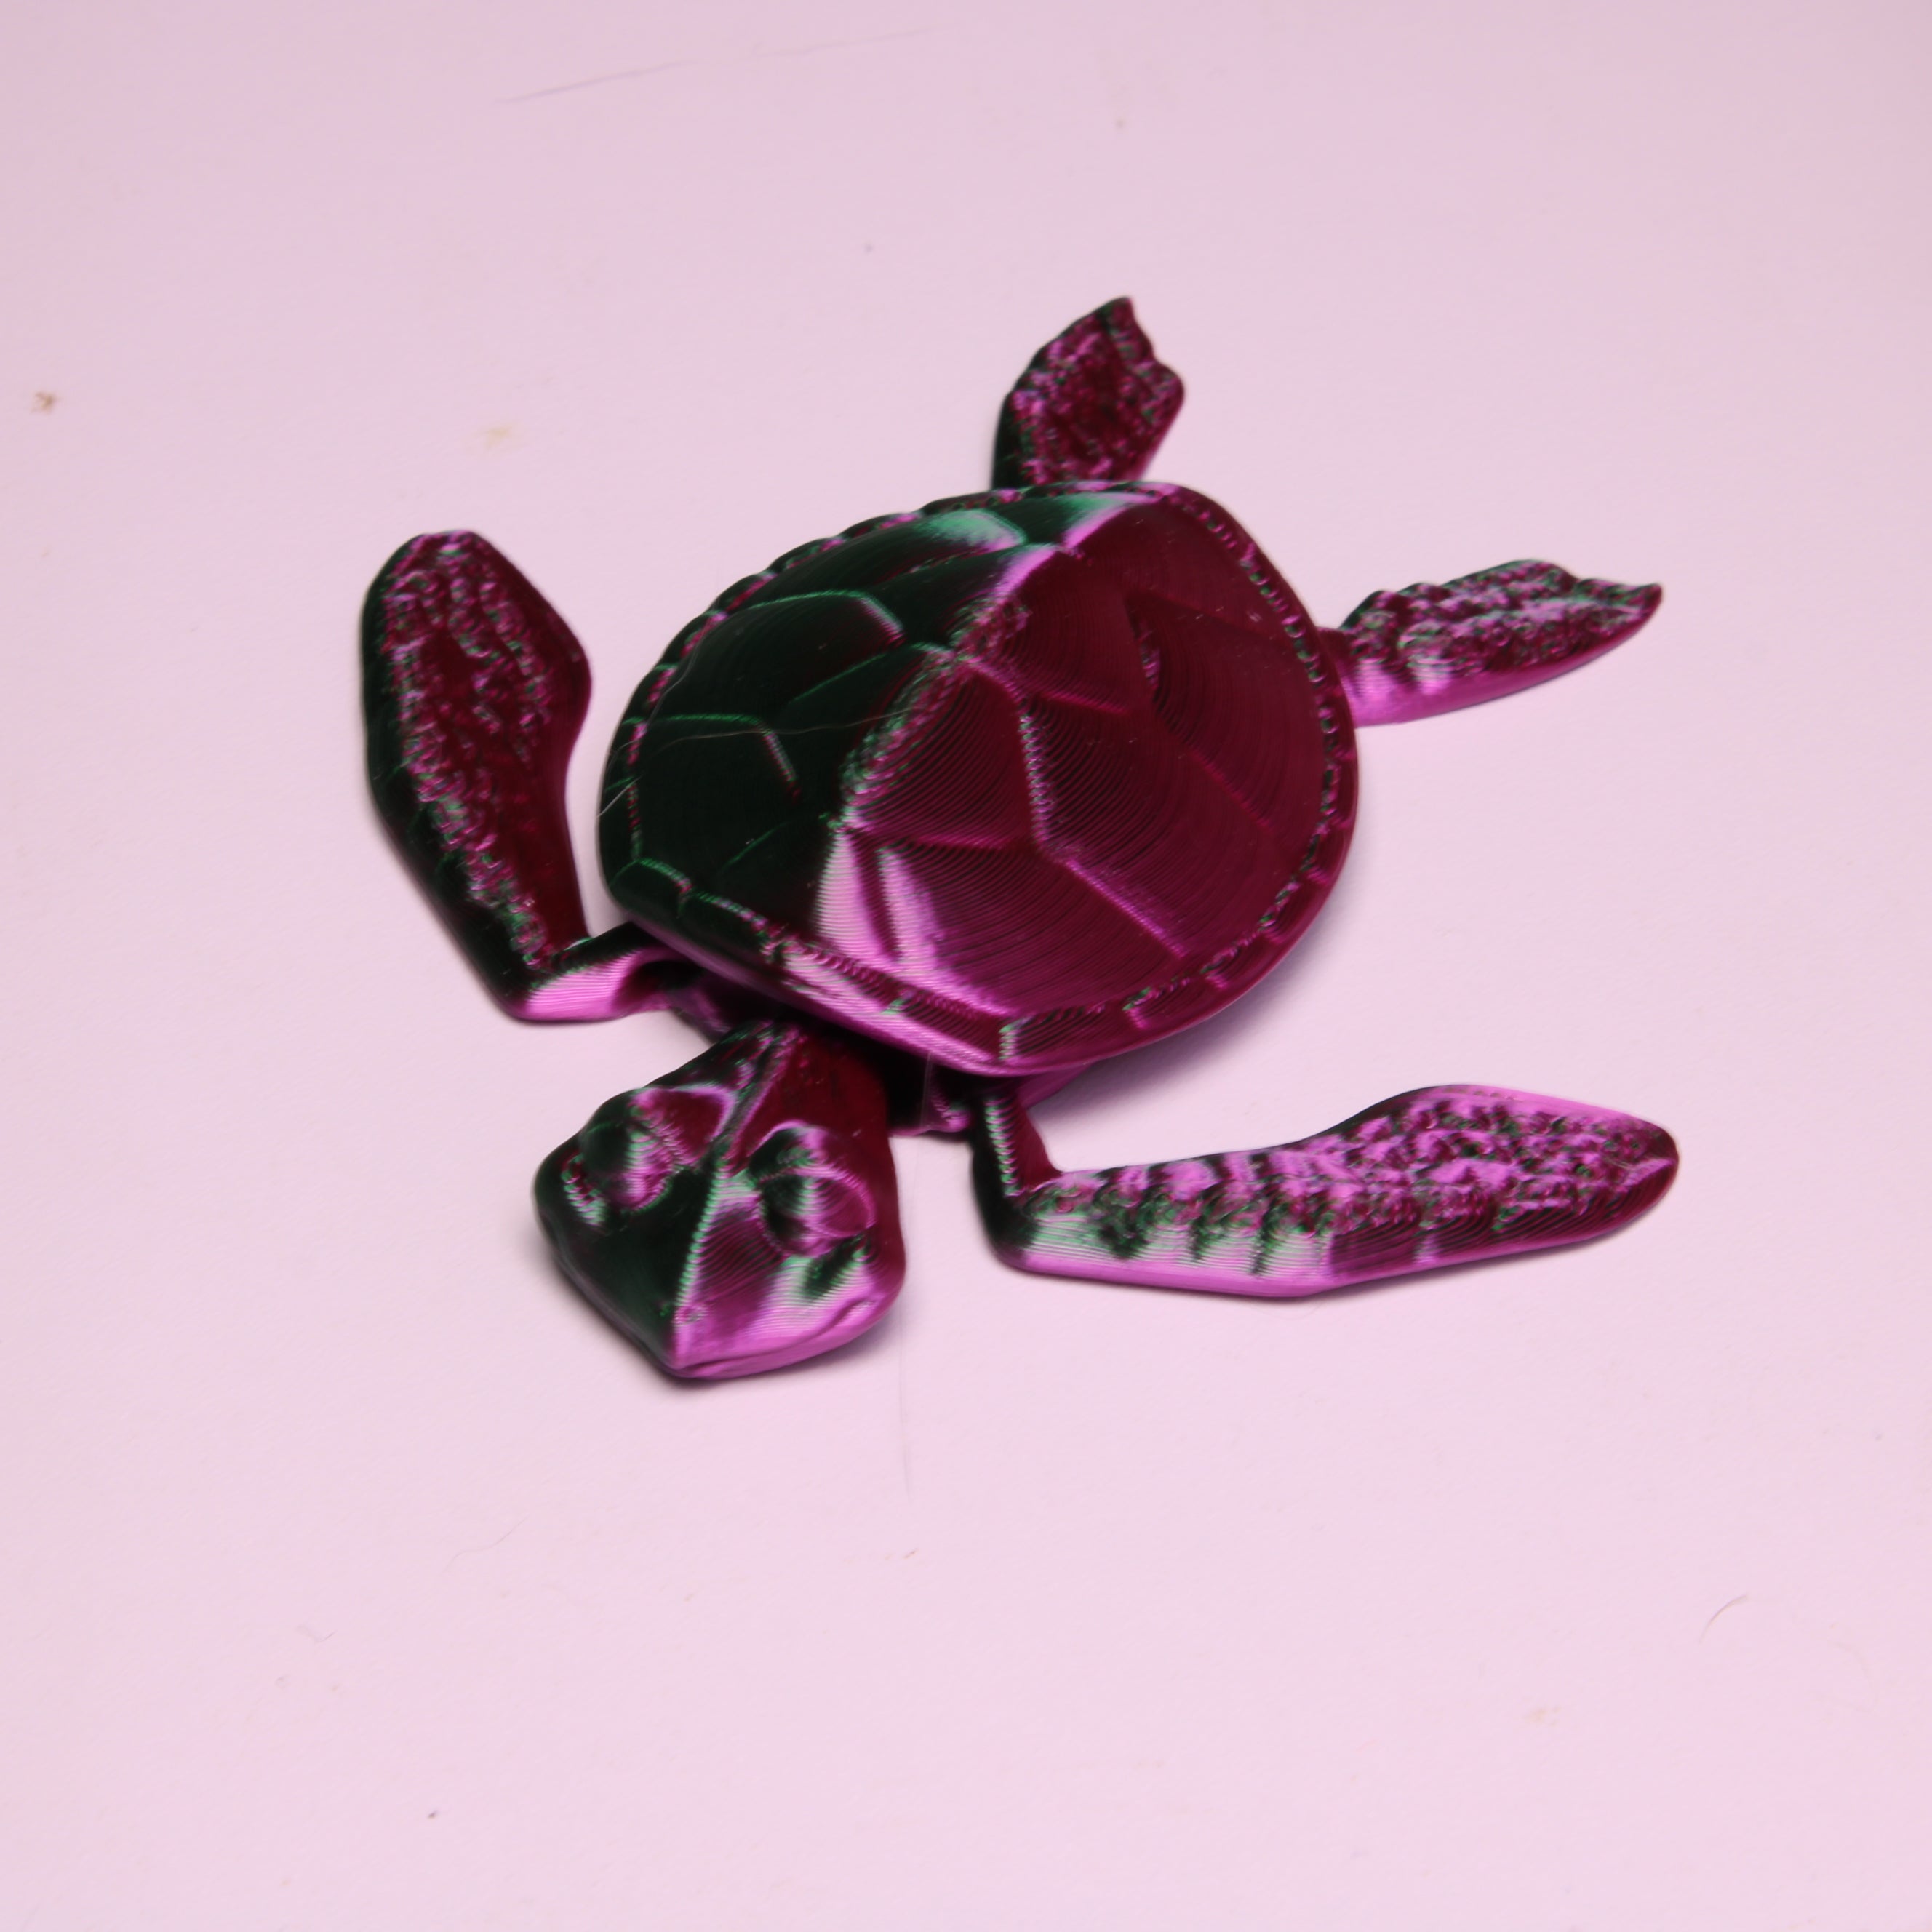 Miniature Surprise Turtle - 3D printed